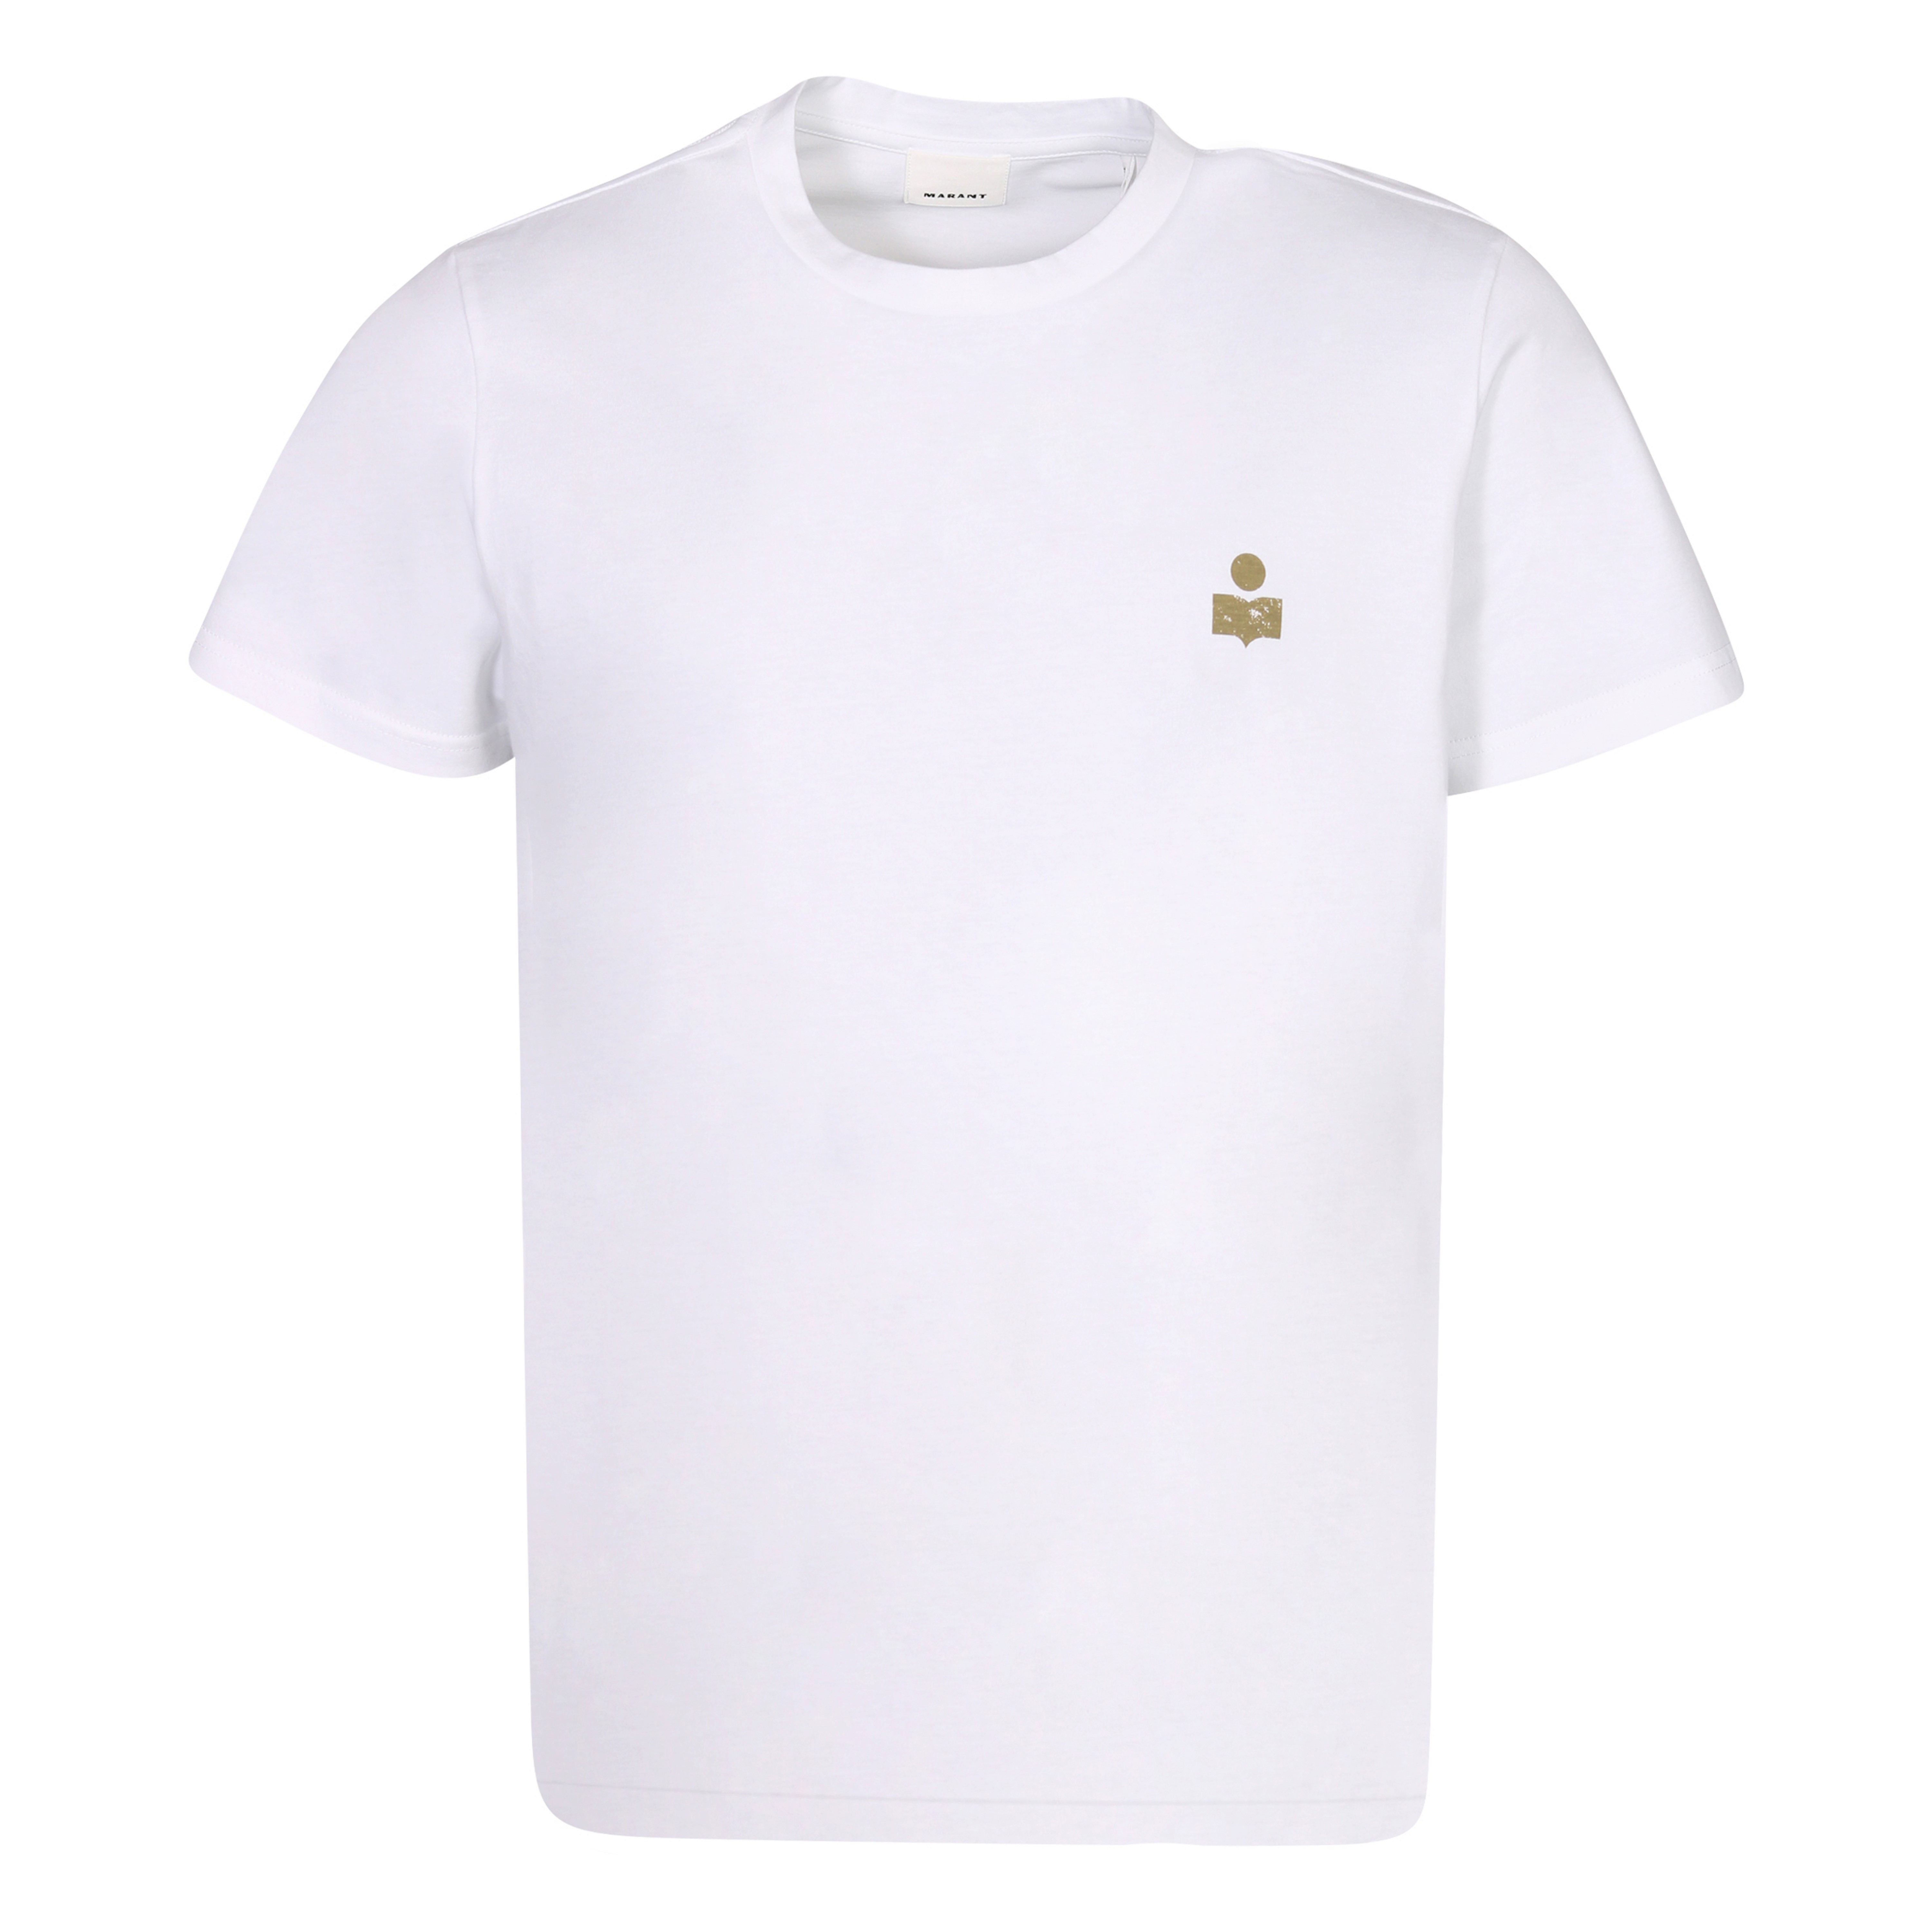 Isabel Marant Zafferh T-Shirt in White/Khaki S